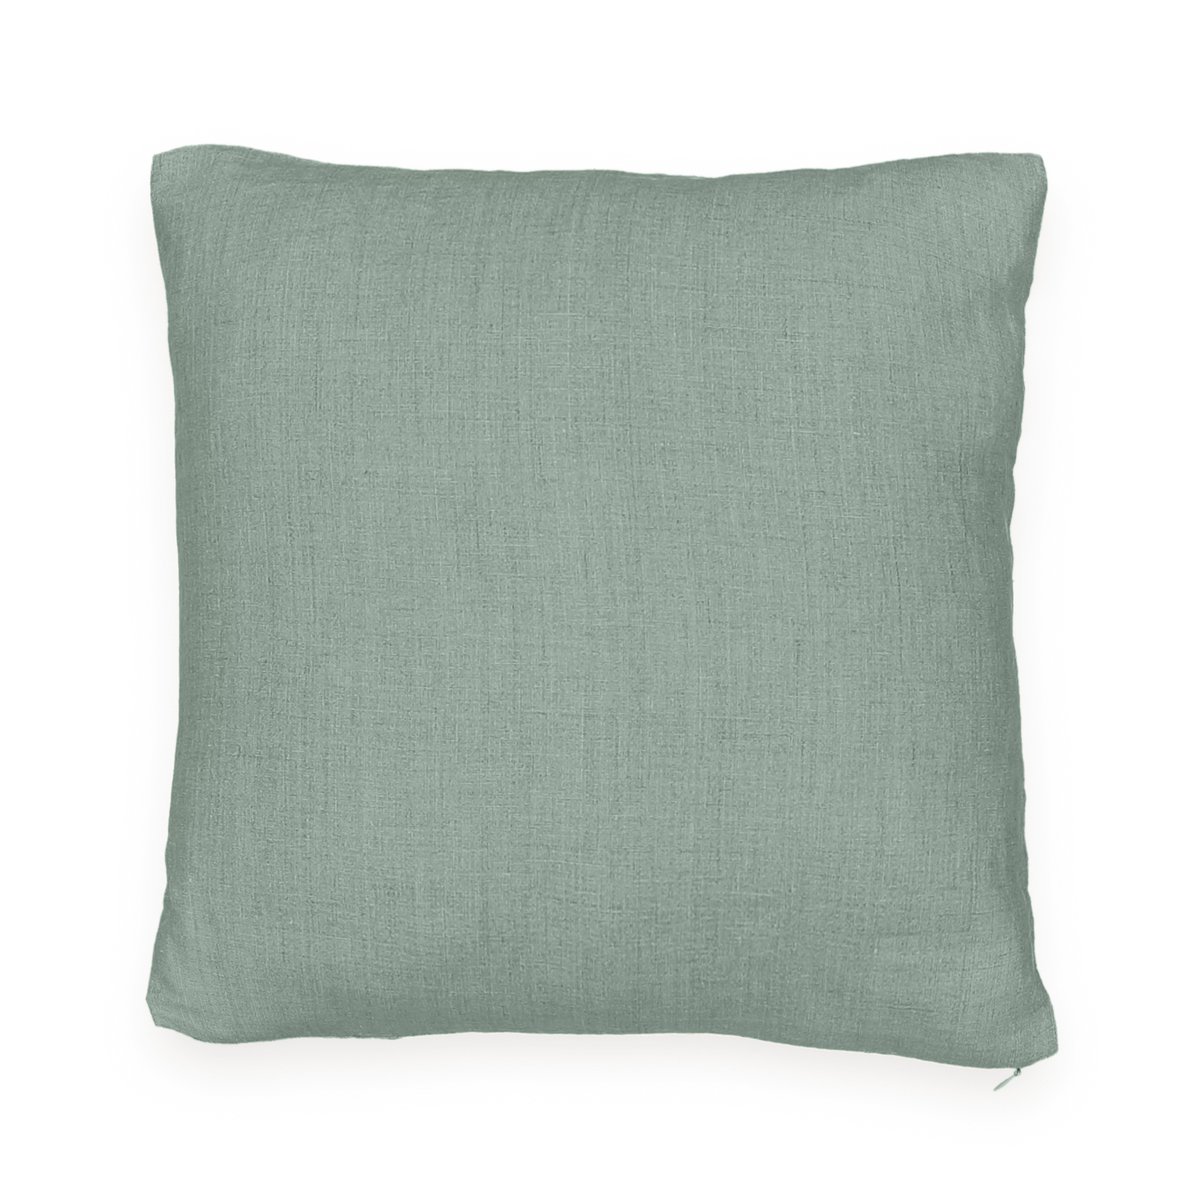 Чехол LaRedoute Для подушки из стираного льна Onega 40 x 40 см зеленый, размер 40 x 40 см - фото 1